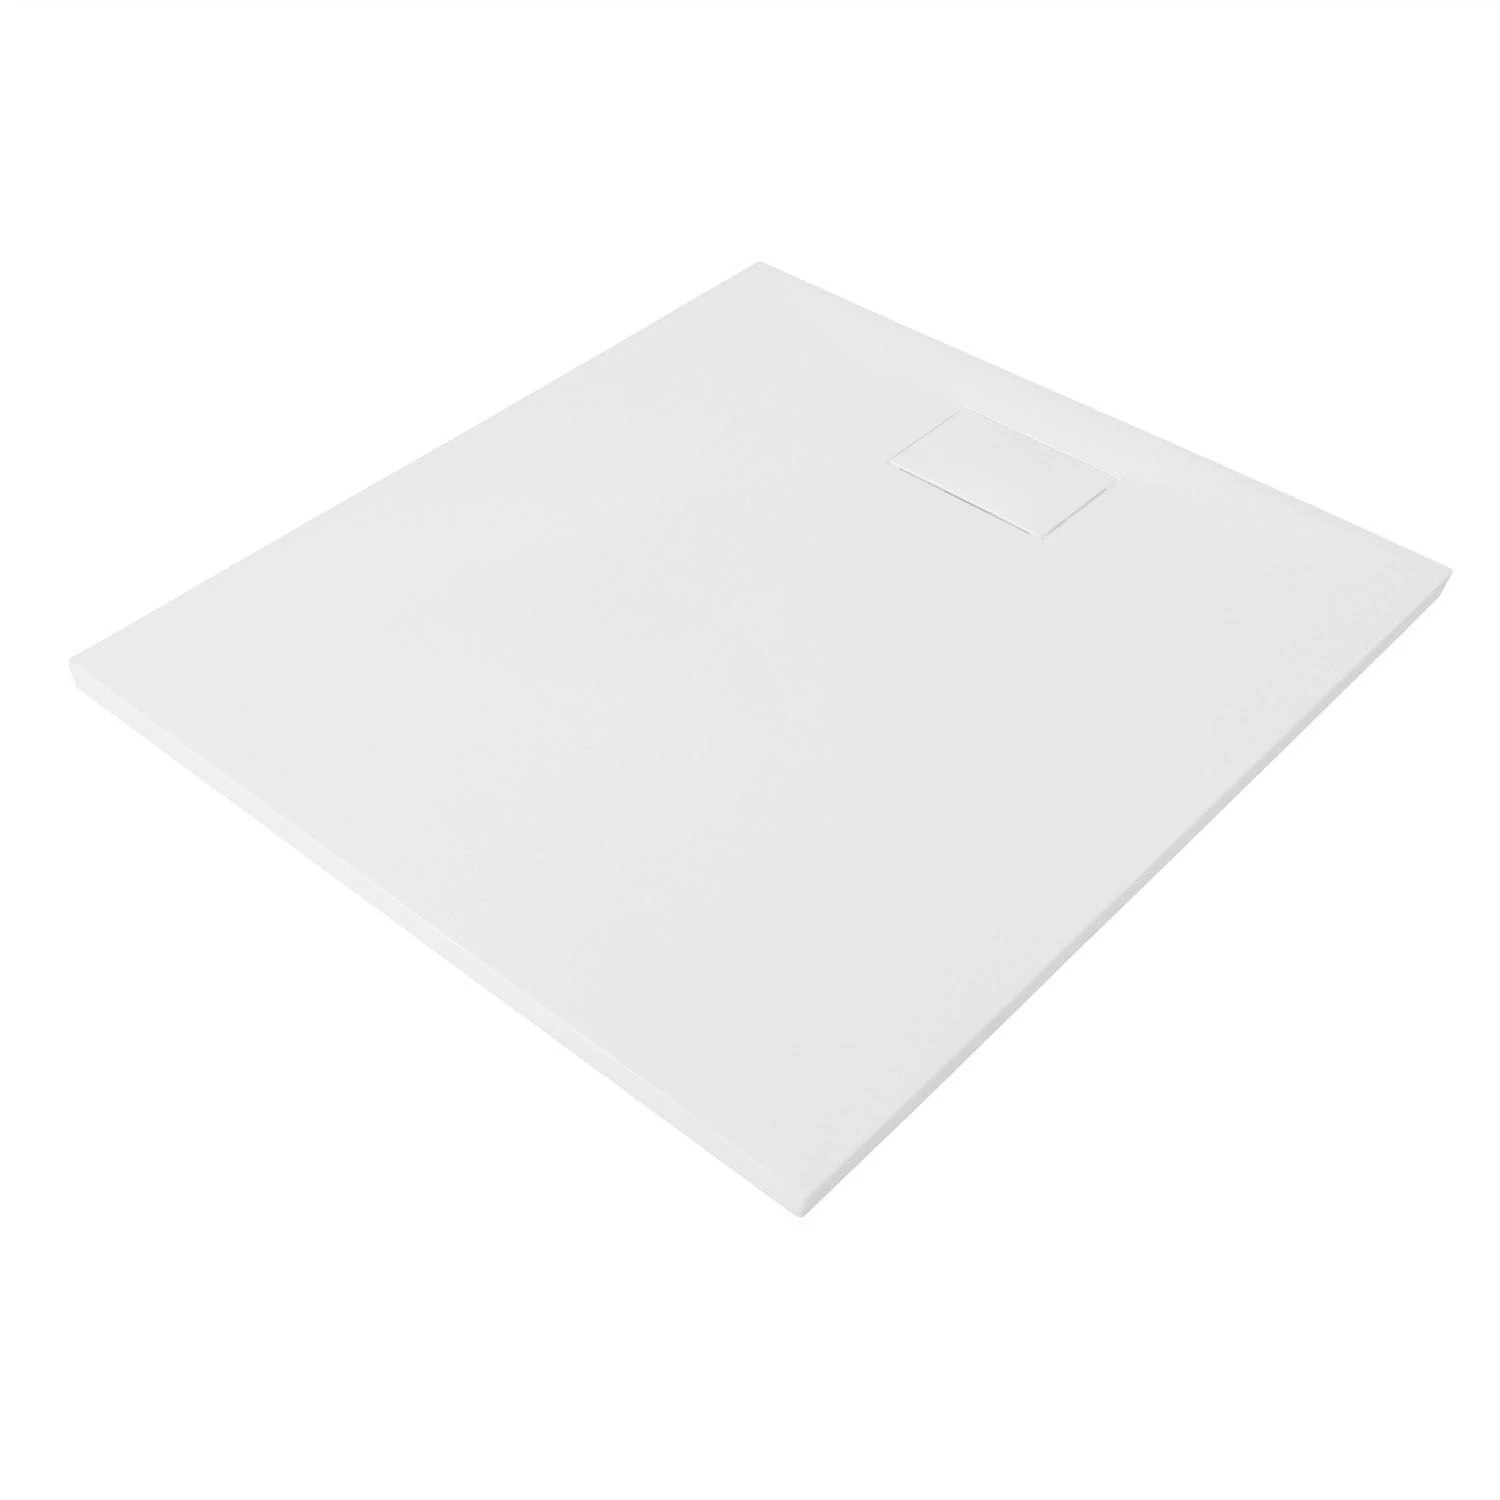 Поддон для душа WasserKRAFT Main 41T22 100x90, стеклопластик (SMC), цвет белый